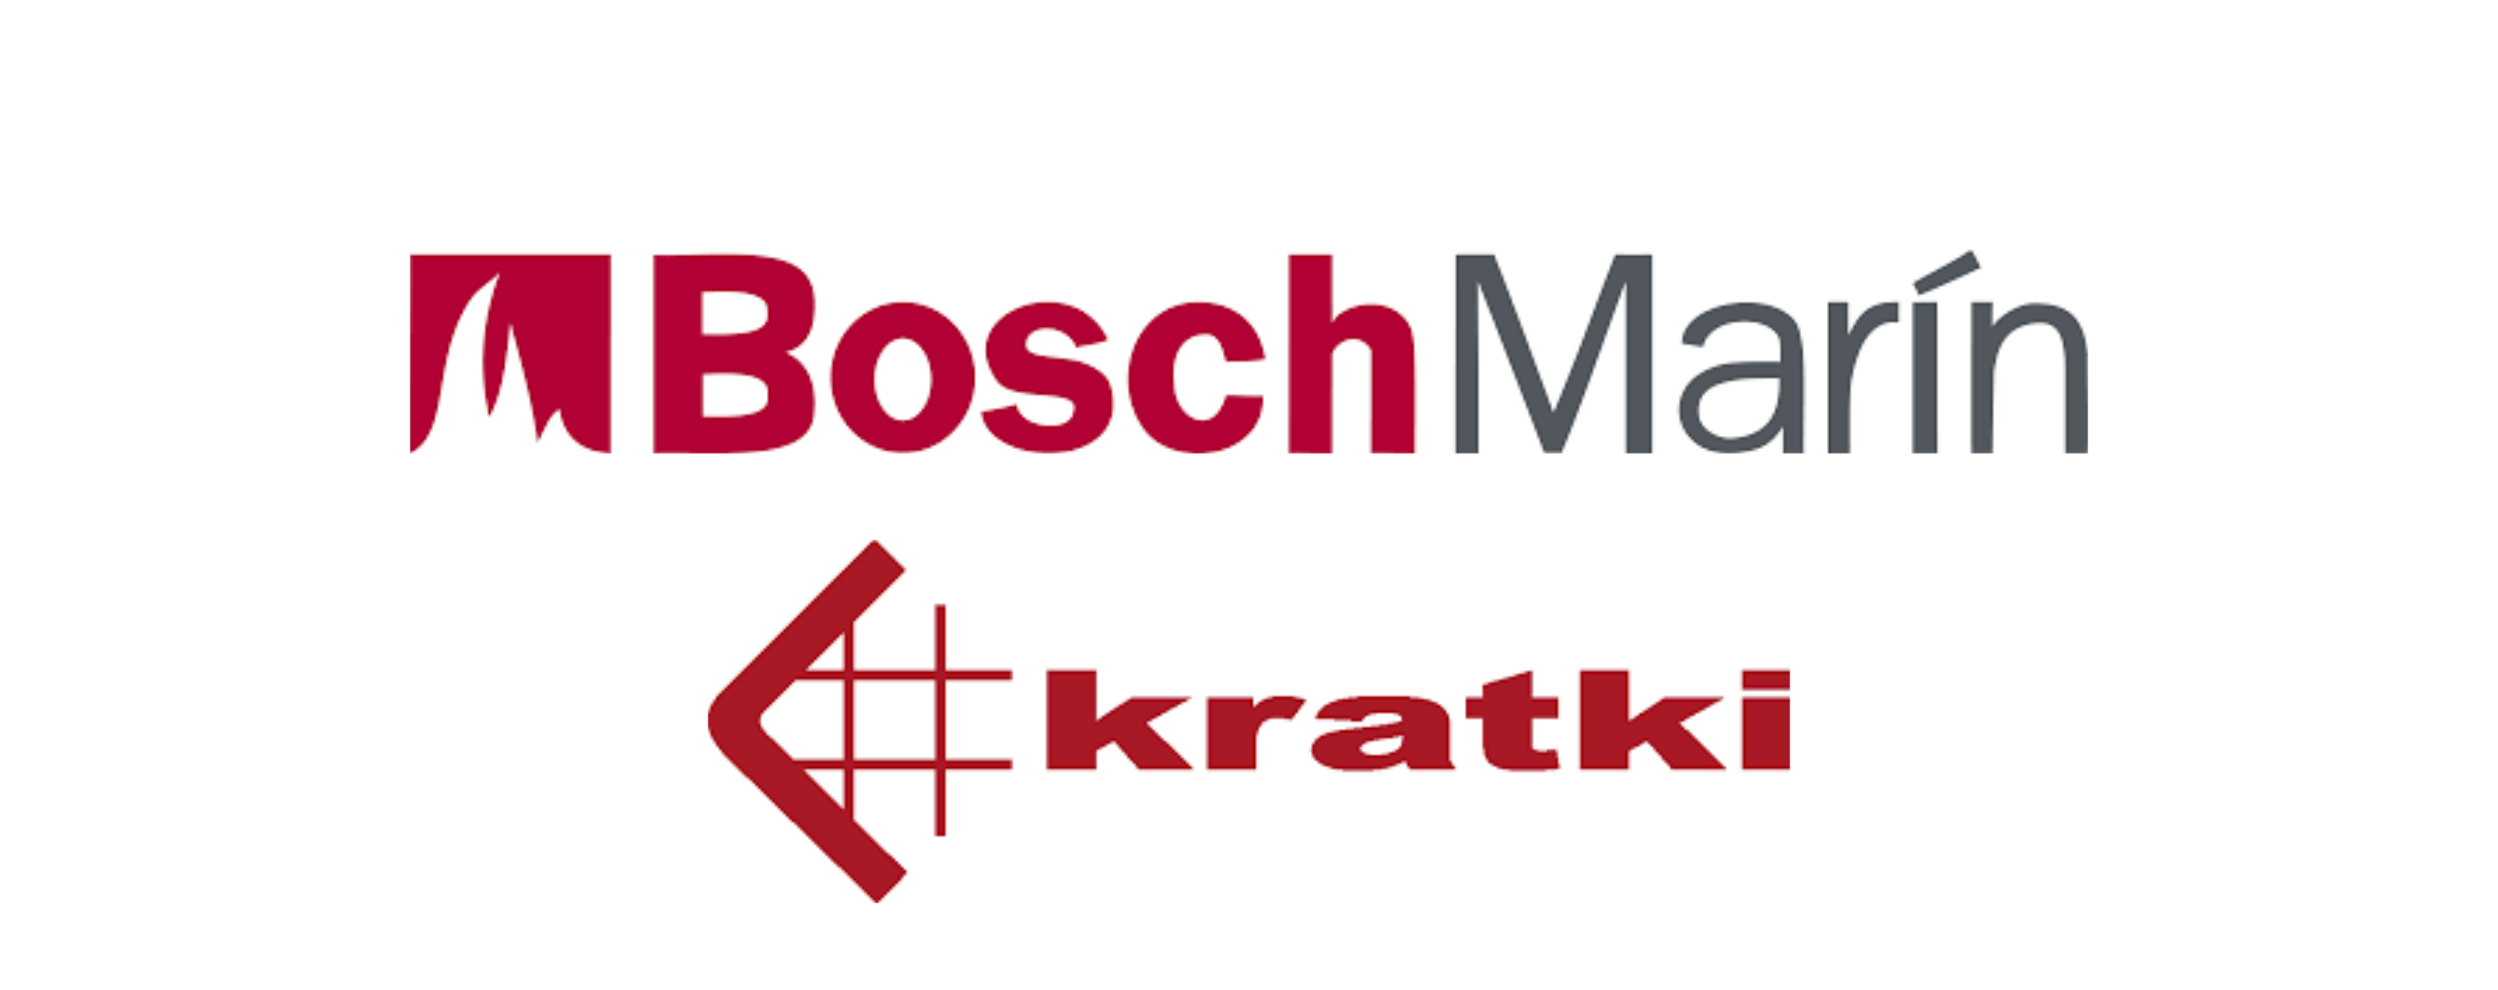 Bosch Marin présente Kratki